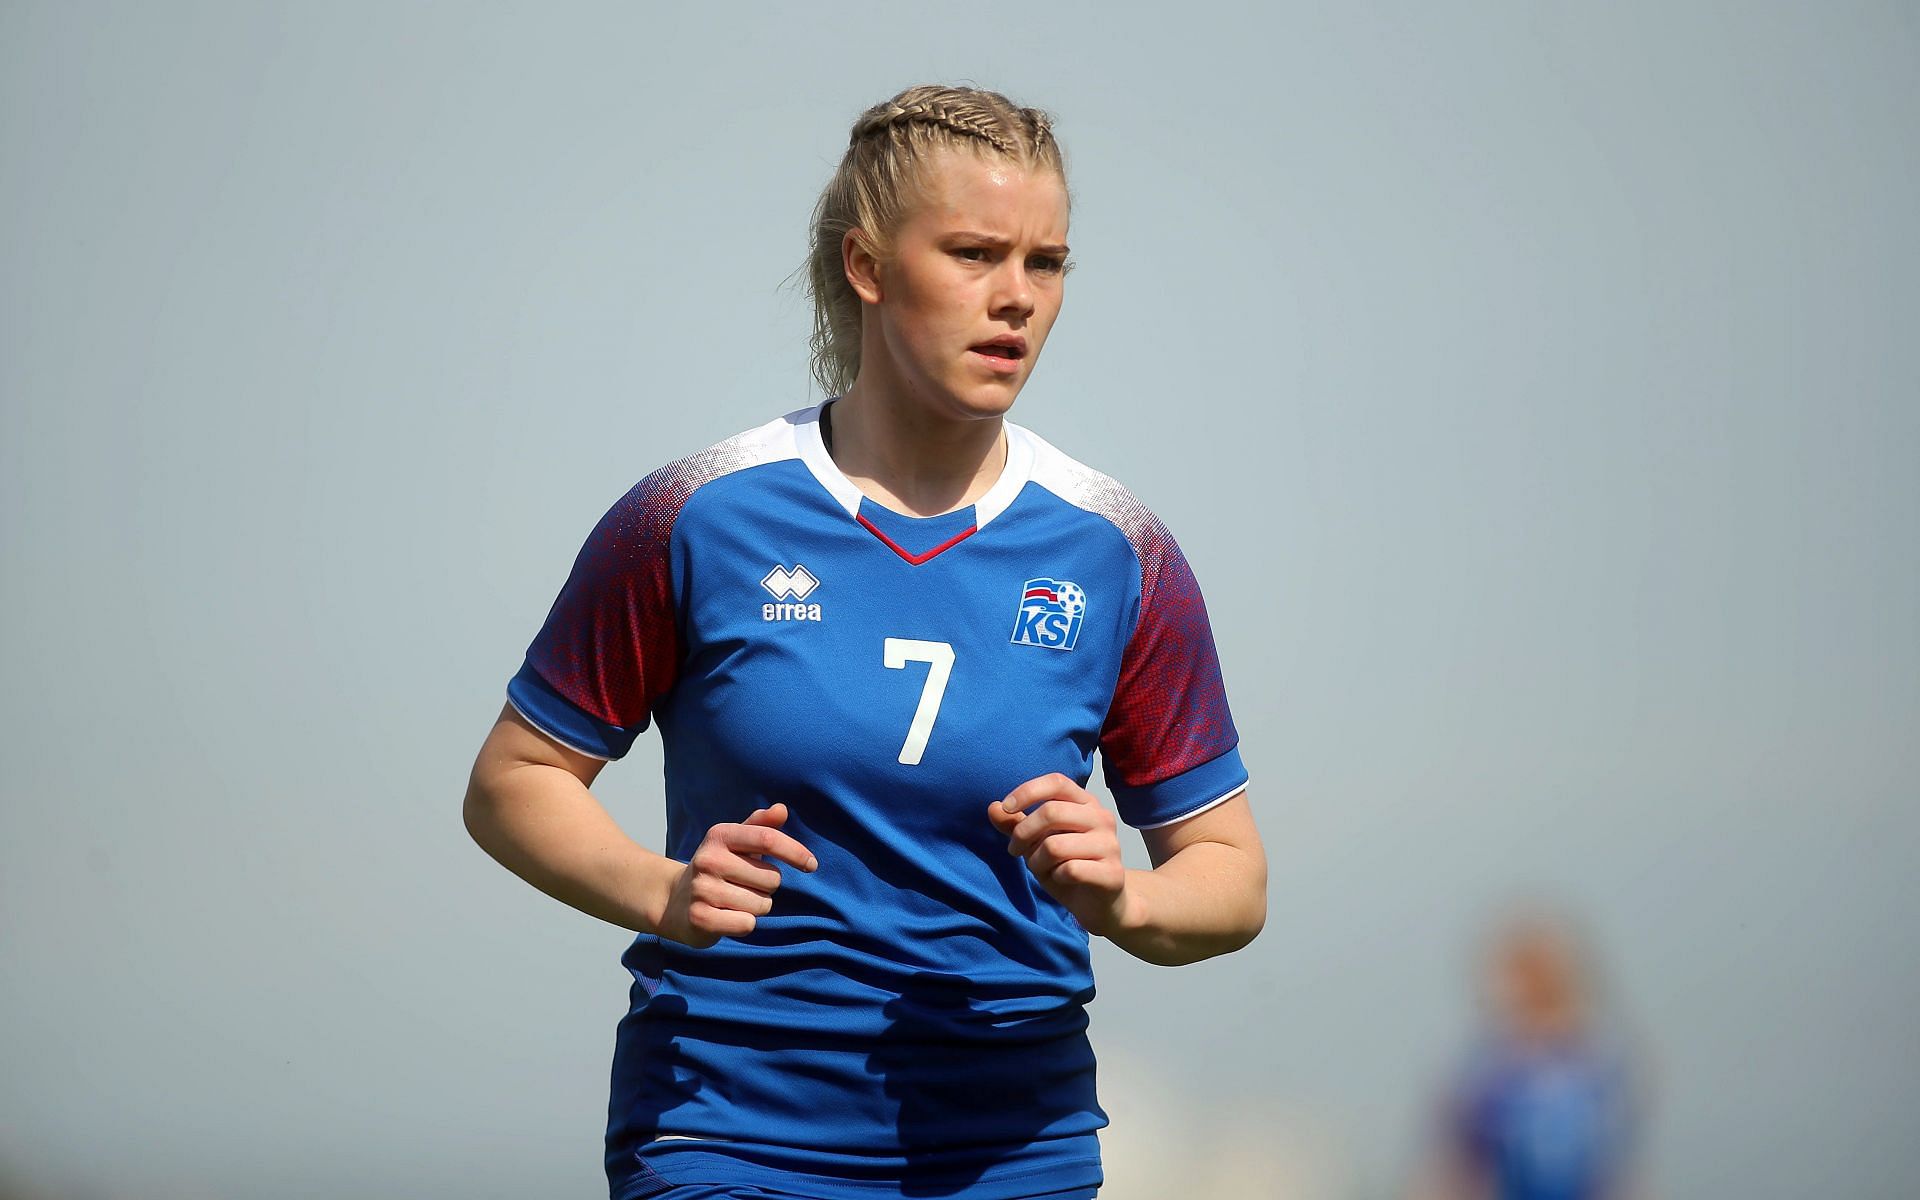 Iceland Women will face New Zealand Women on Thursday